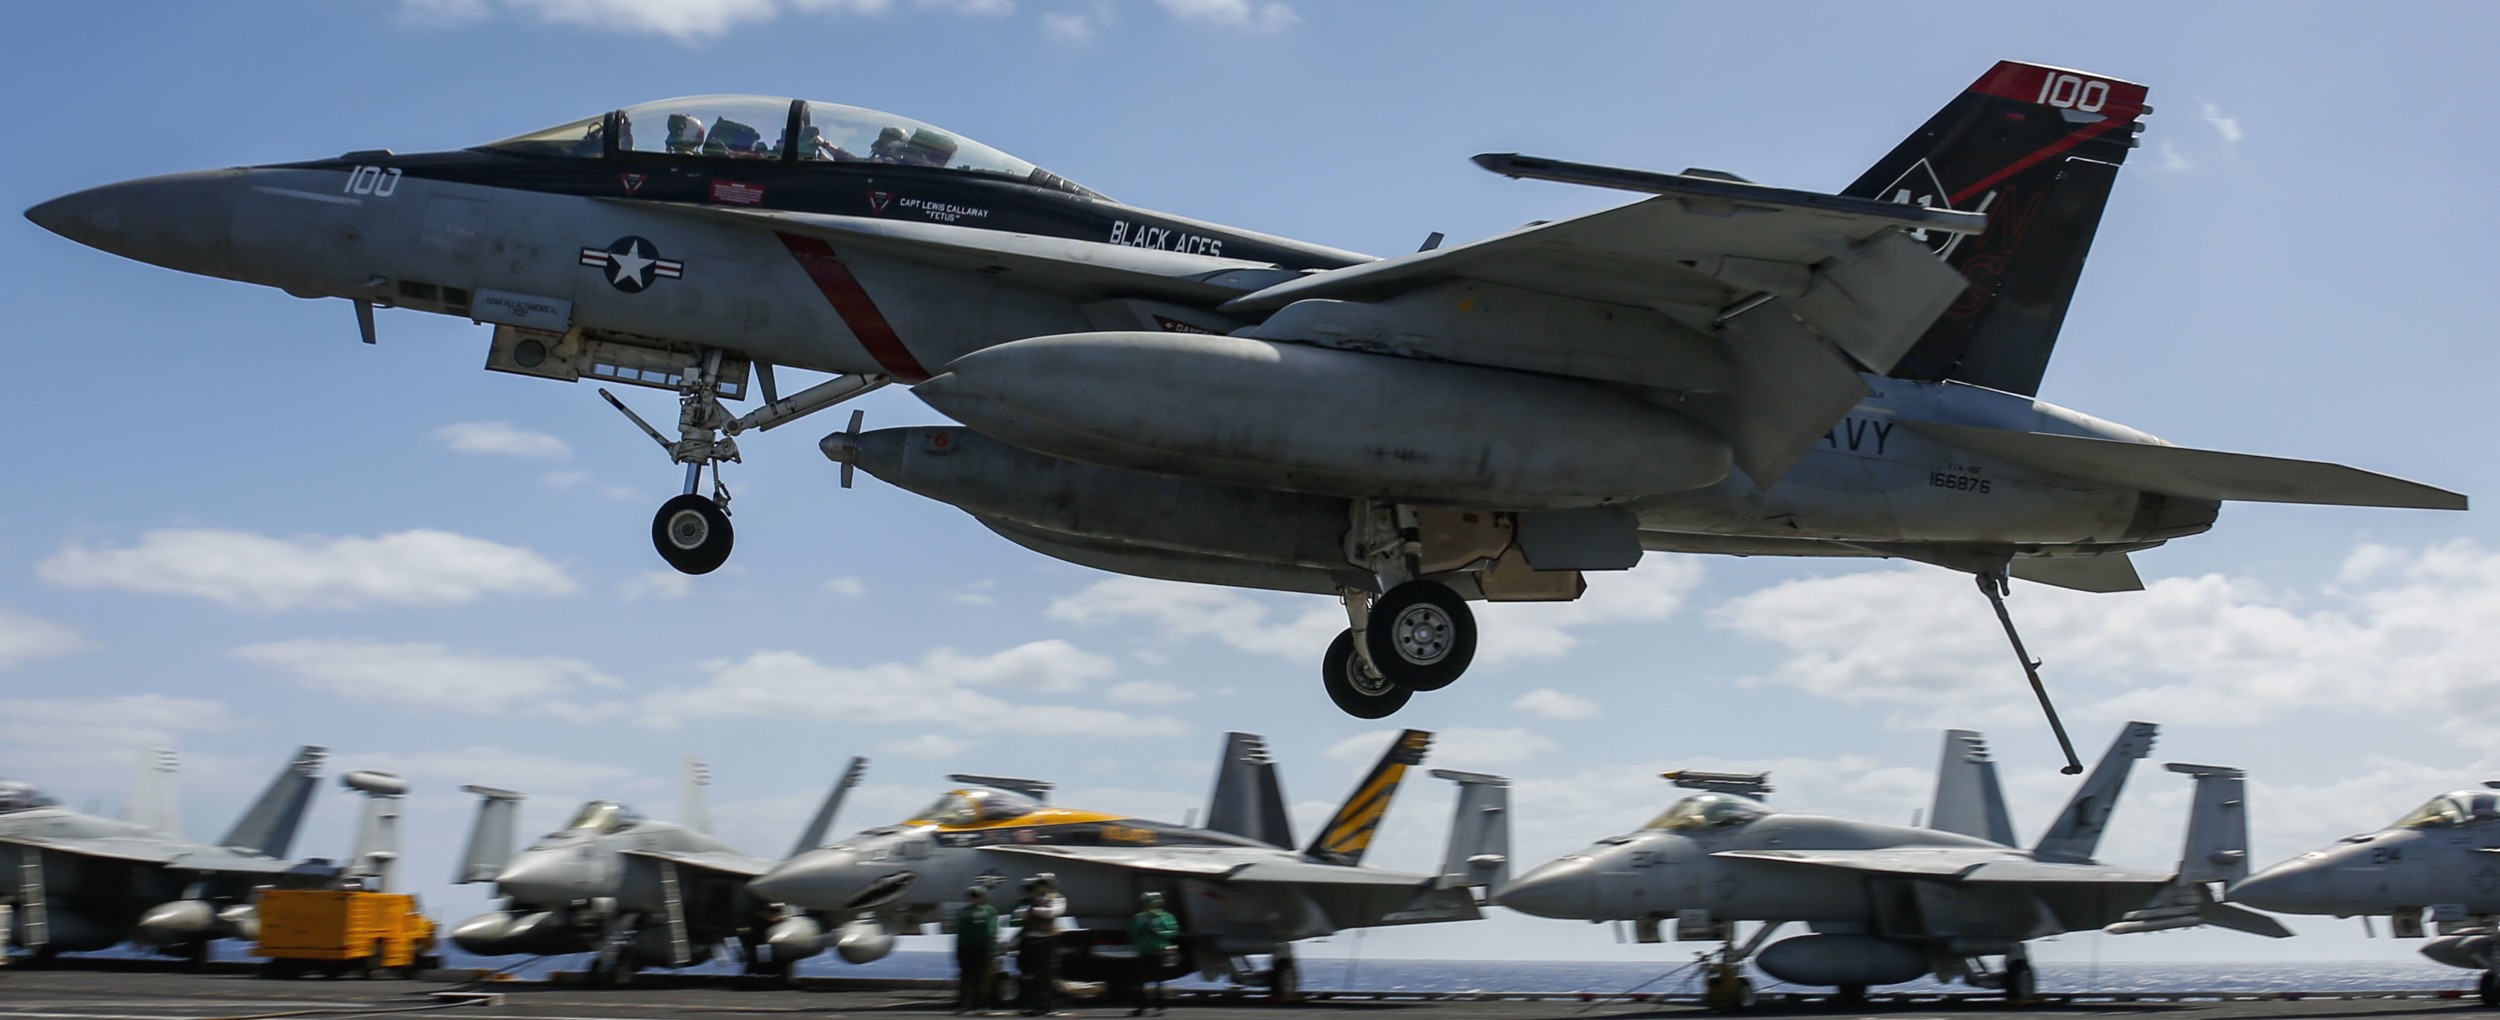 vfa-41 black aces strike fighter squadron f/a-18f super hornet cvw-9 cvn-72 uss abraham lincoln us navy 75